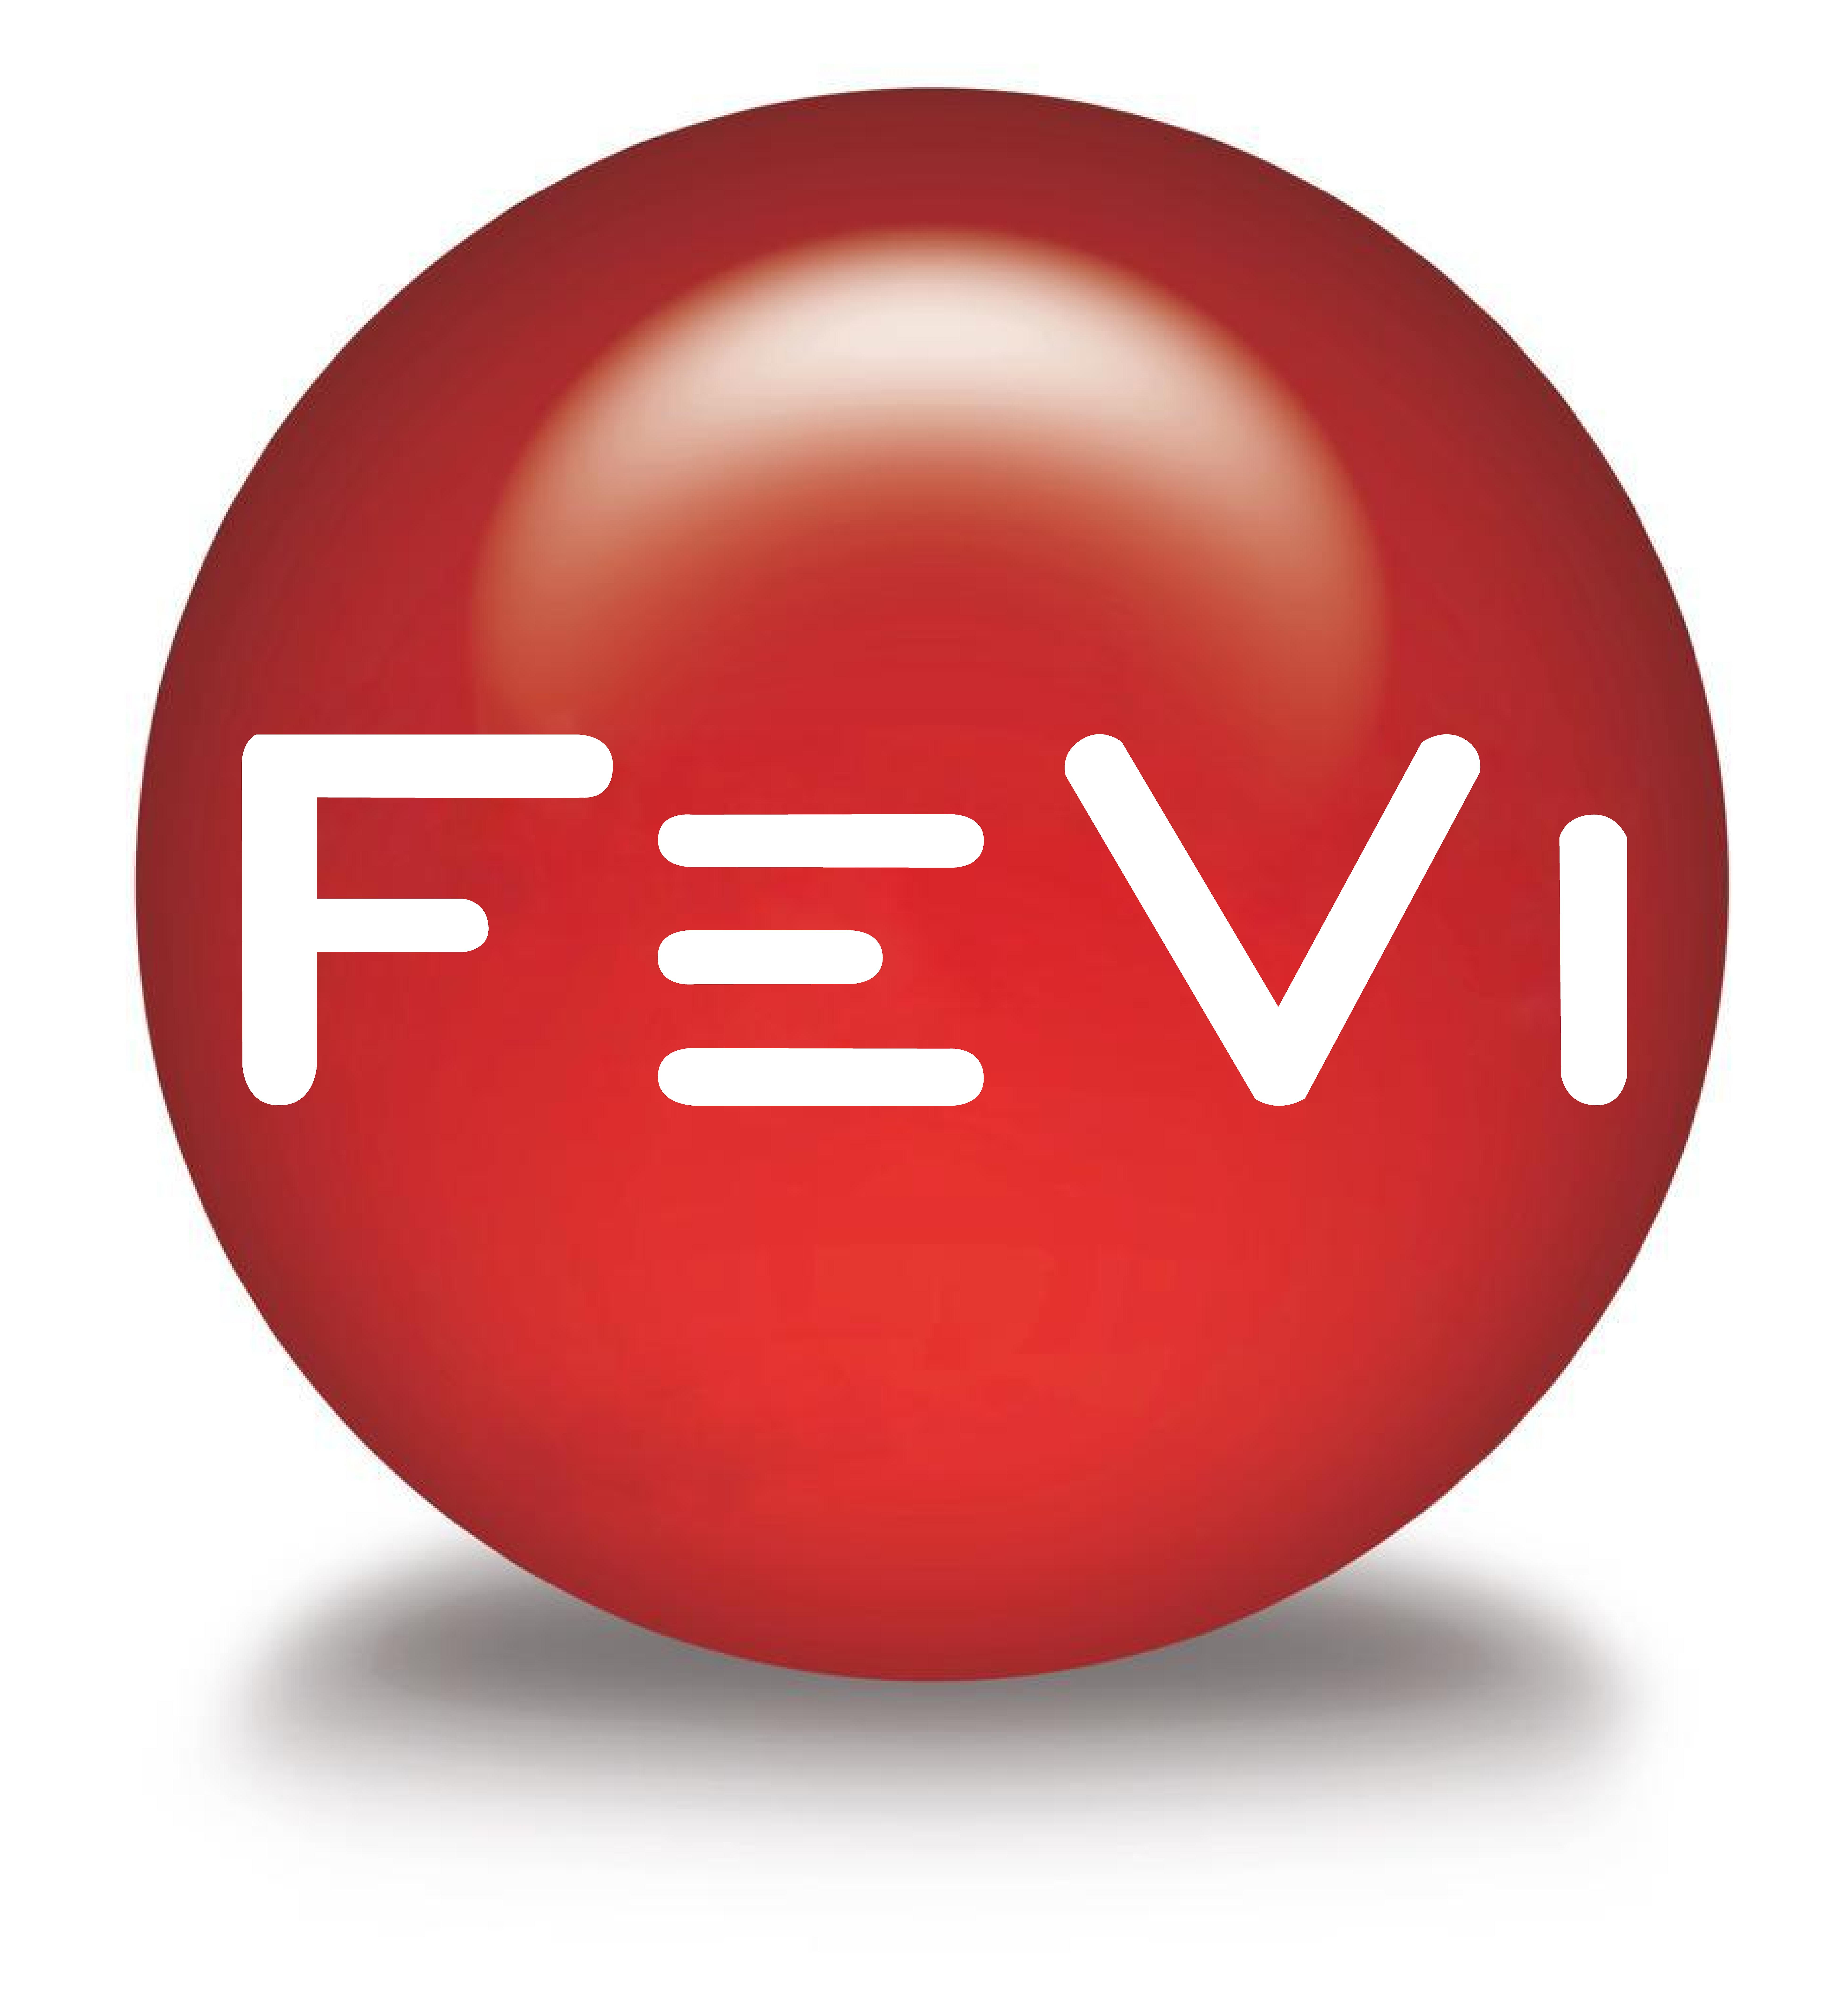 NEWS: Restyling Fevi Brand